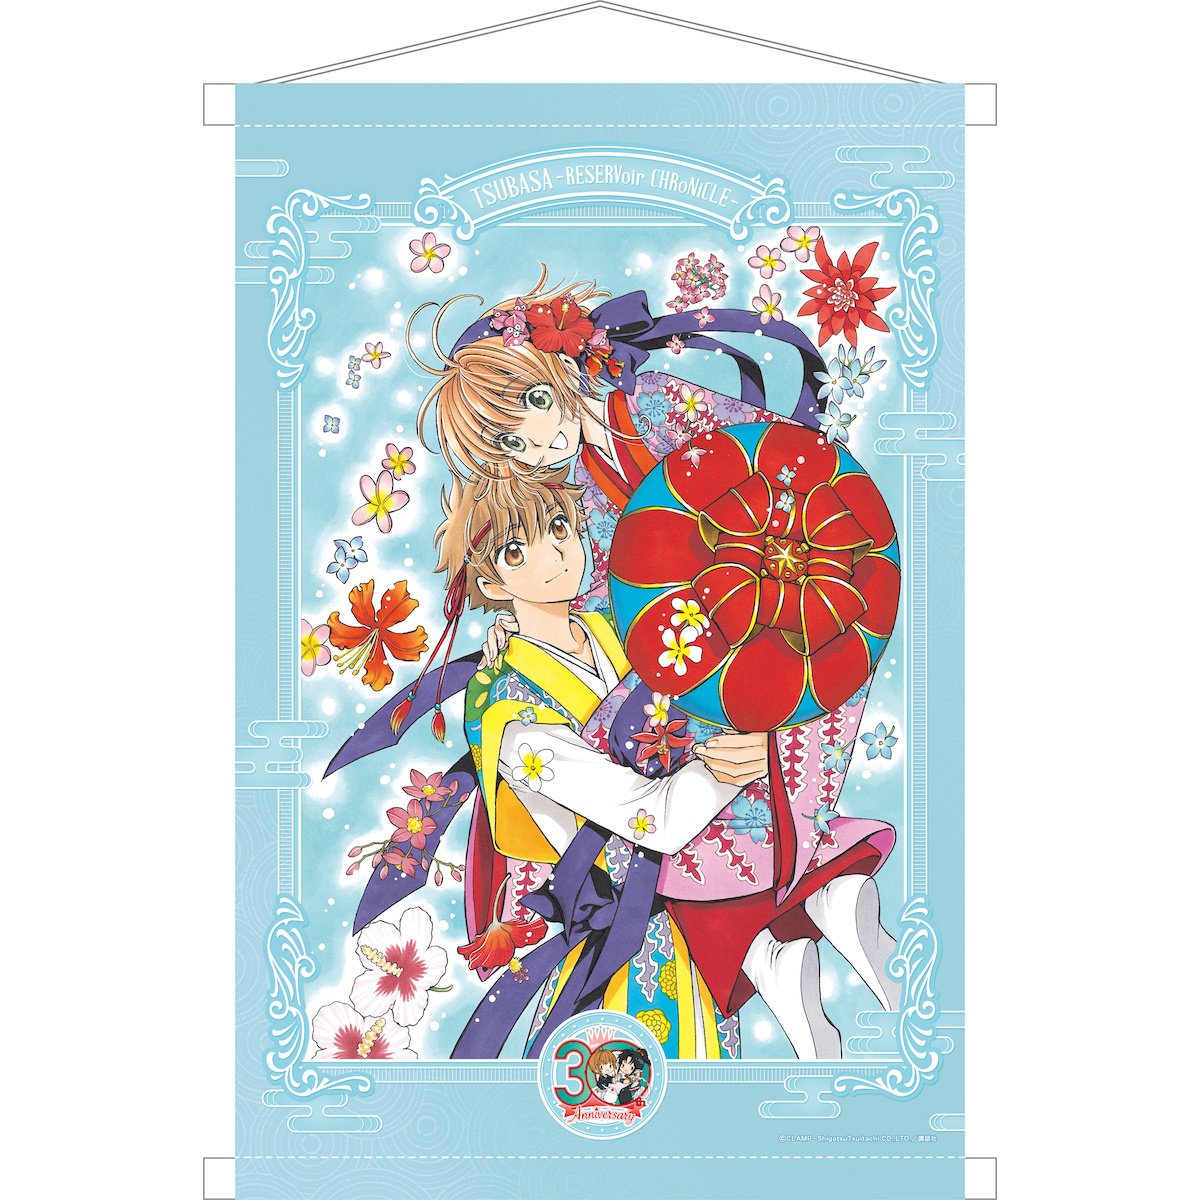 CLAMP 30th Anniversary B2 Tapestry: Tsubasa: Reservoir Chronicle: CLAMP 37%  OFF - Tokyo Otaku Mode (TOM)